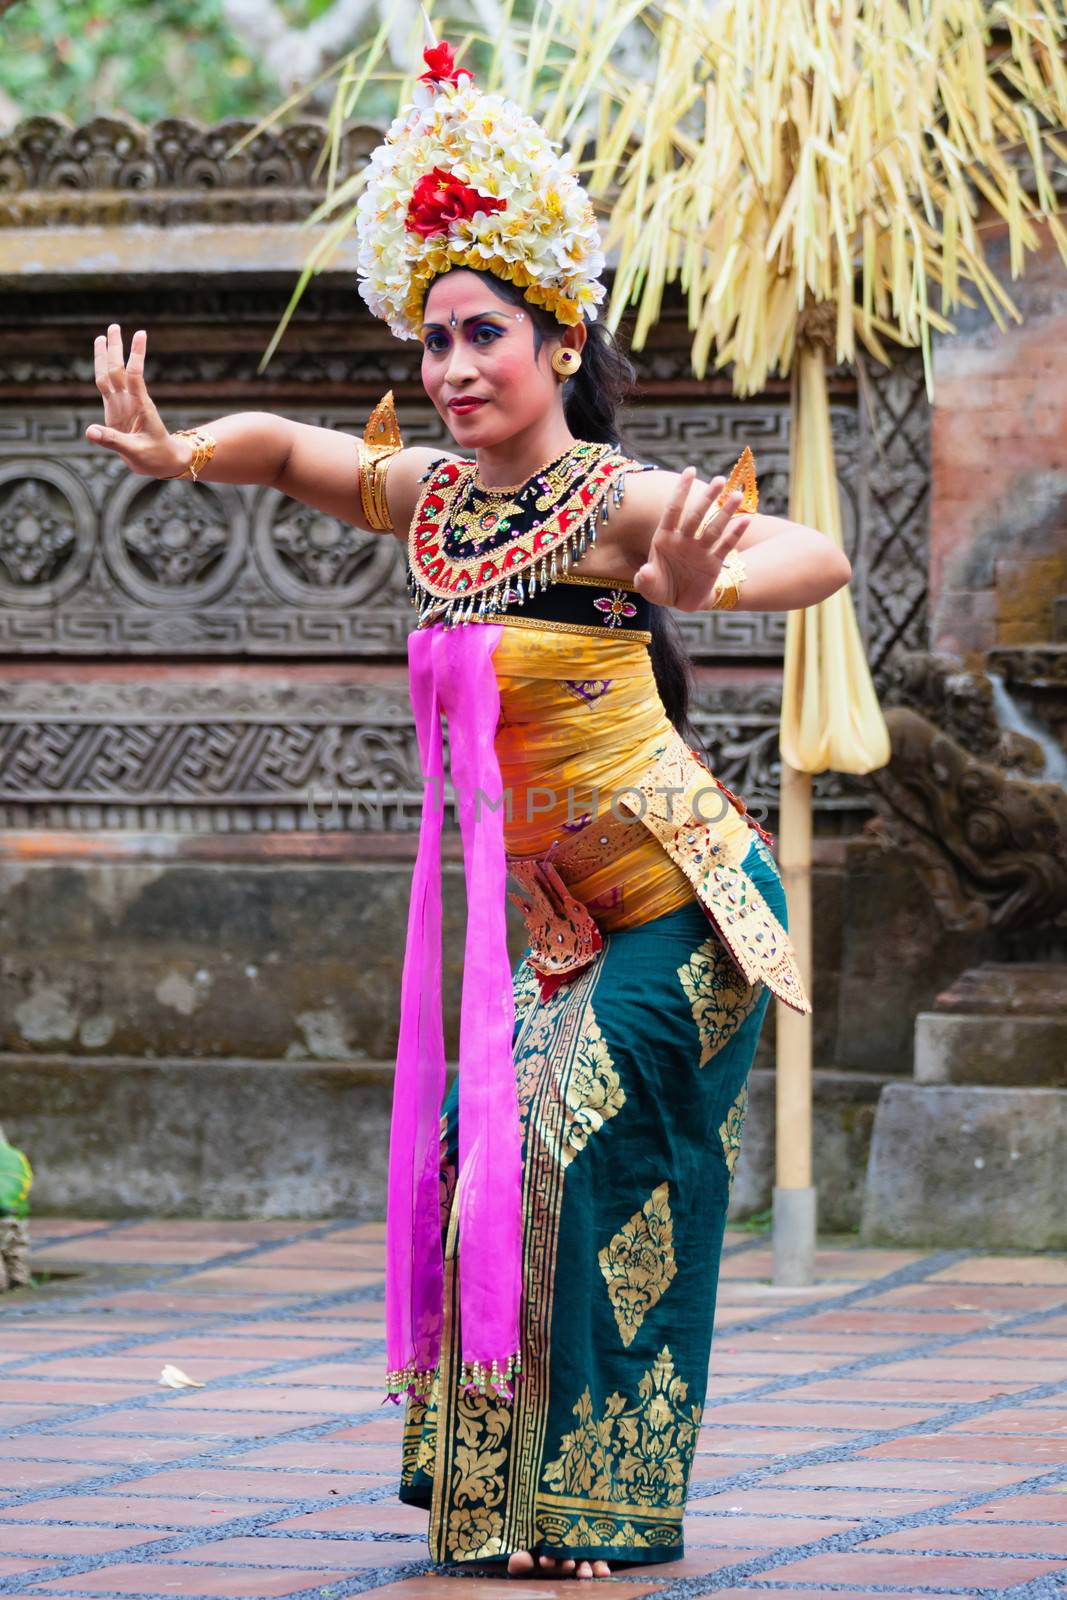 BALI - SEP 21: Barong and Kris Dance performs at Sahadewah, in Batubulan, Bali, Indonesia on Sep 21, 2012. This famous play represents an fight between good and bad gods.